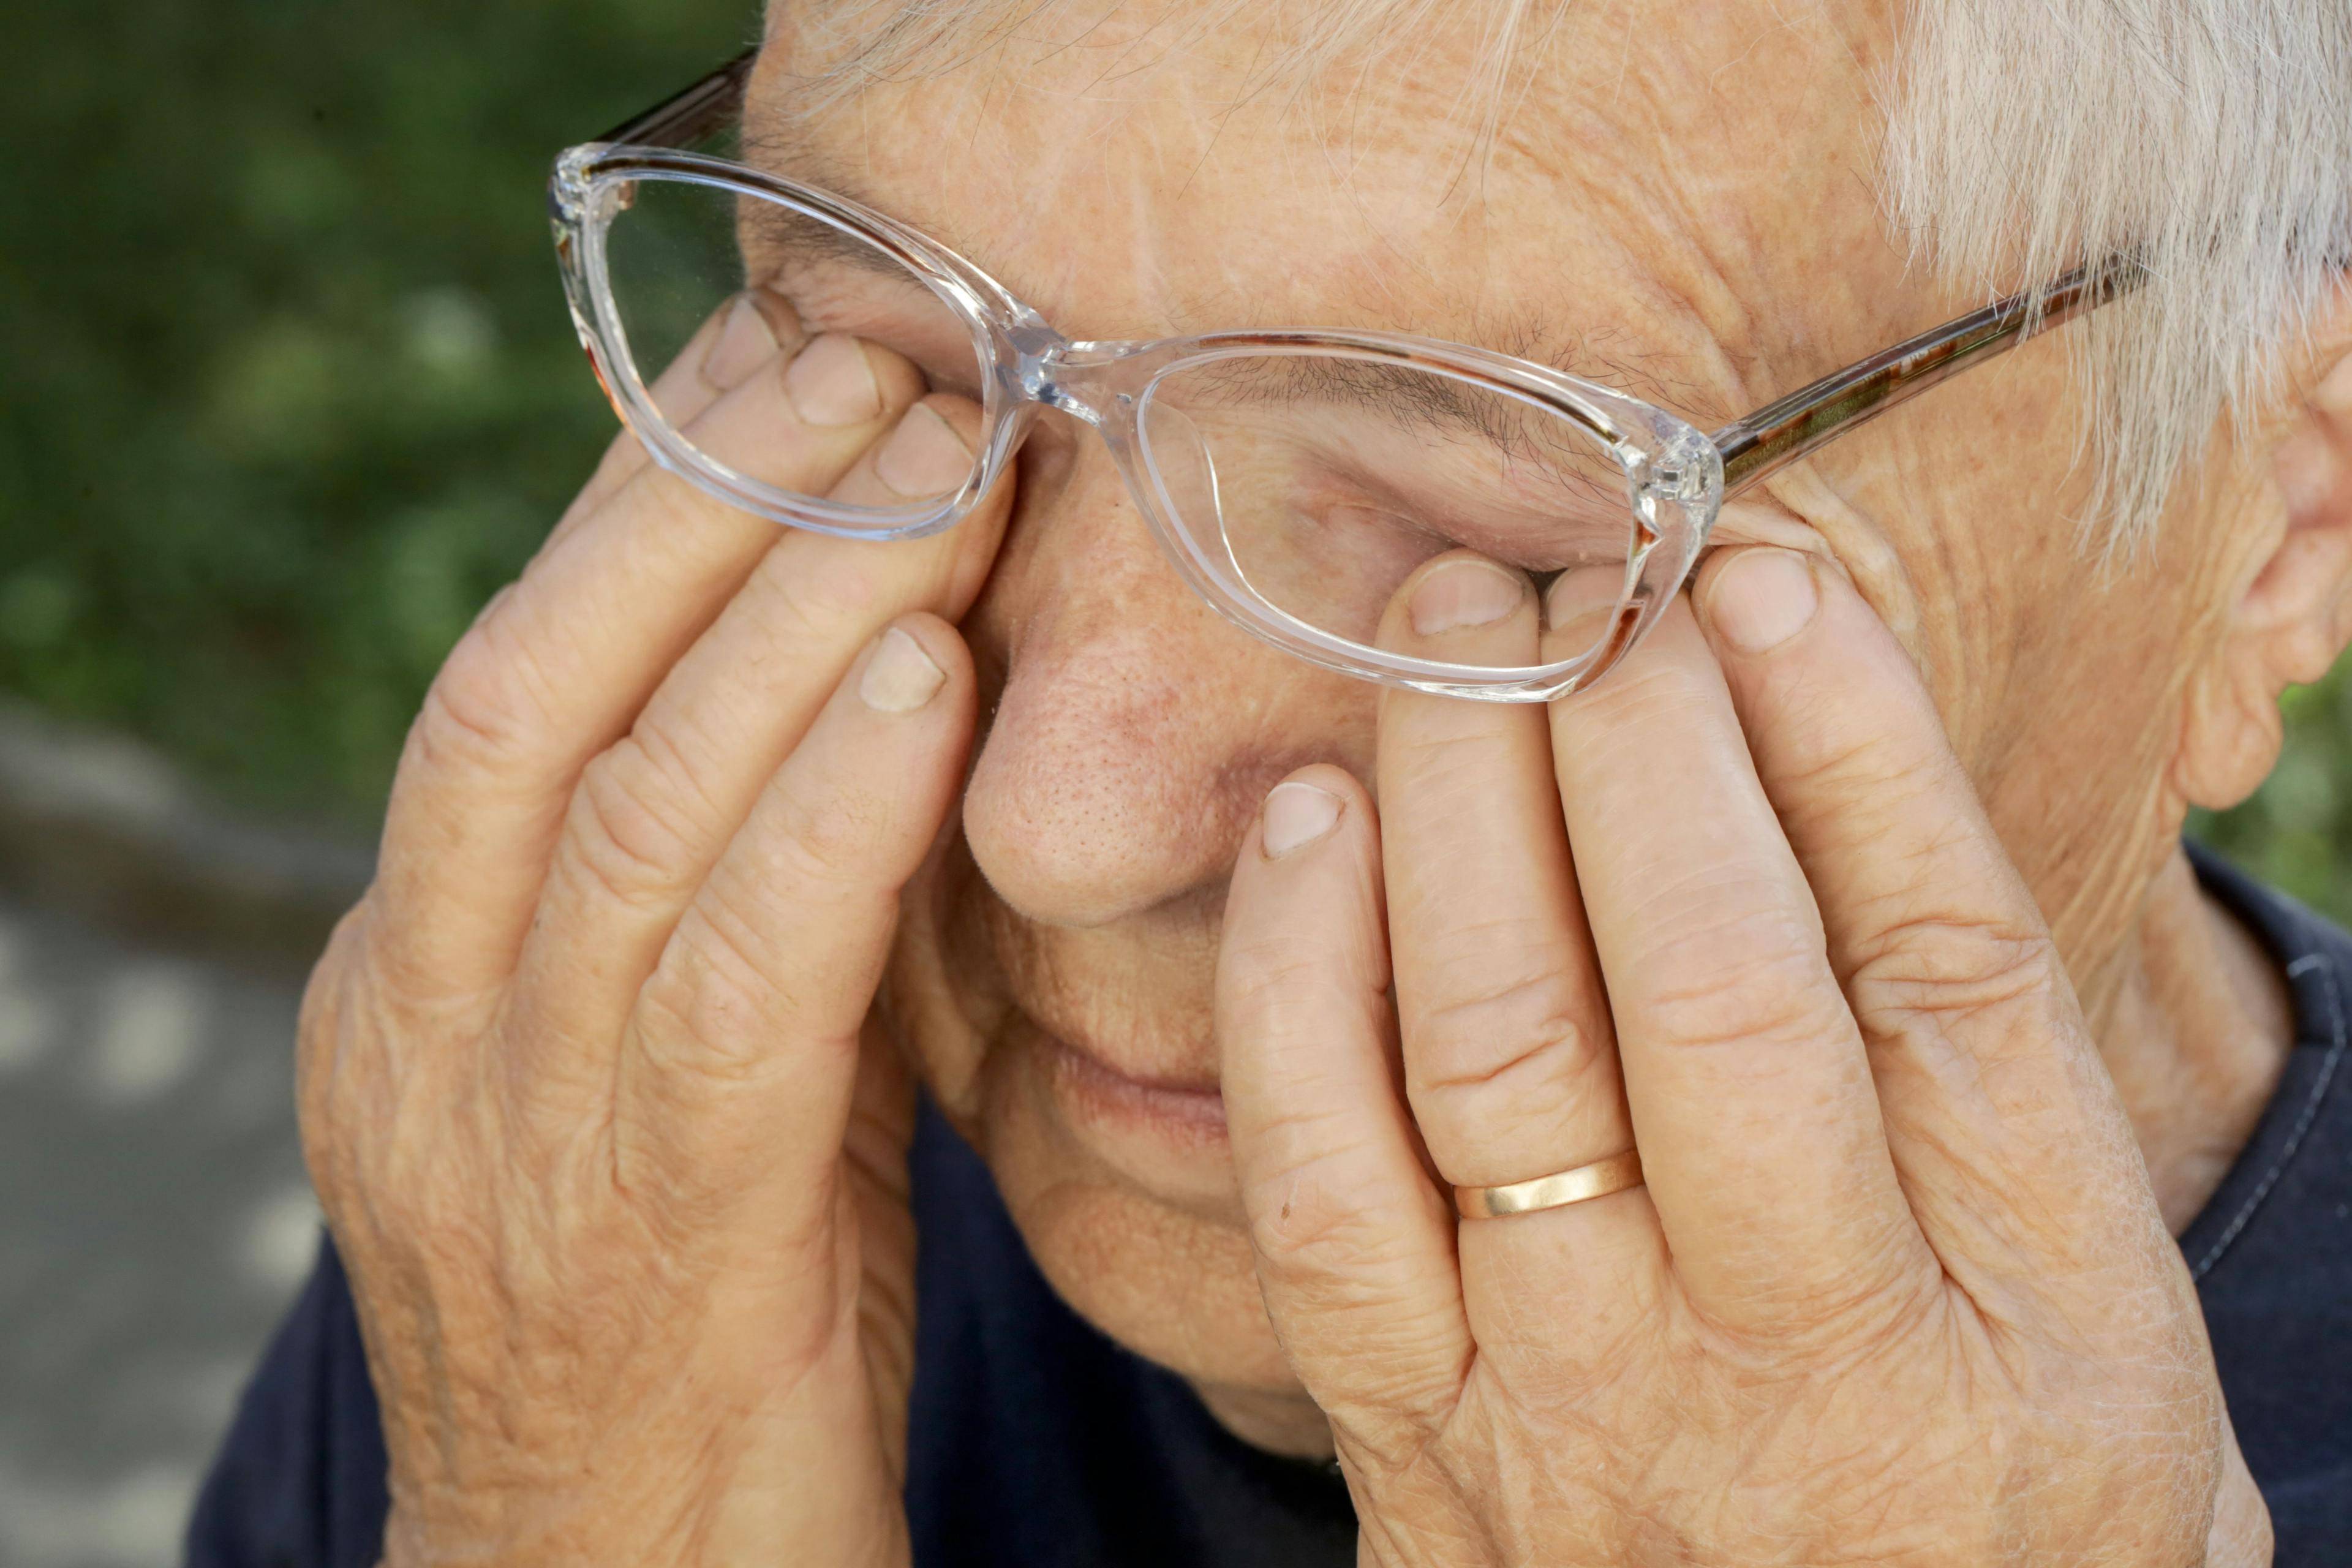 person rubbing their eyes under glasses | Image credit: ©triocean stock.adobe.com